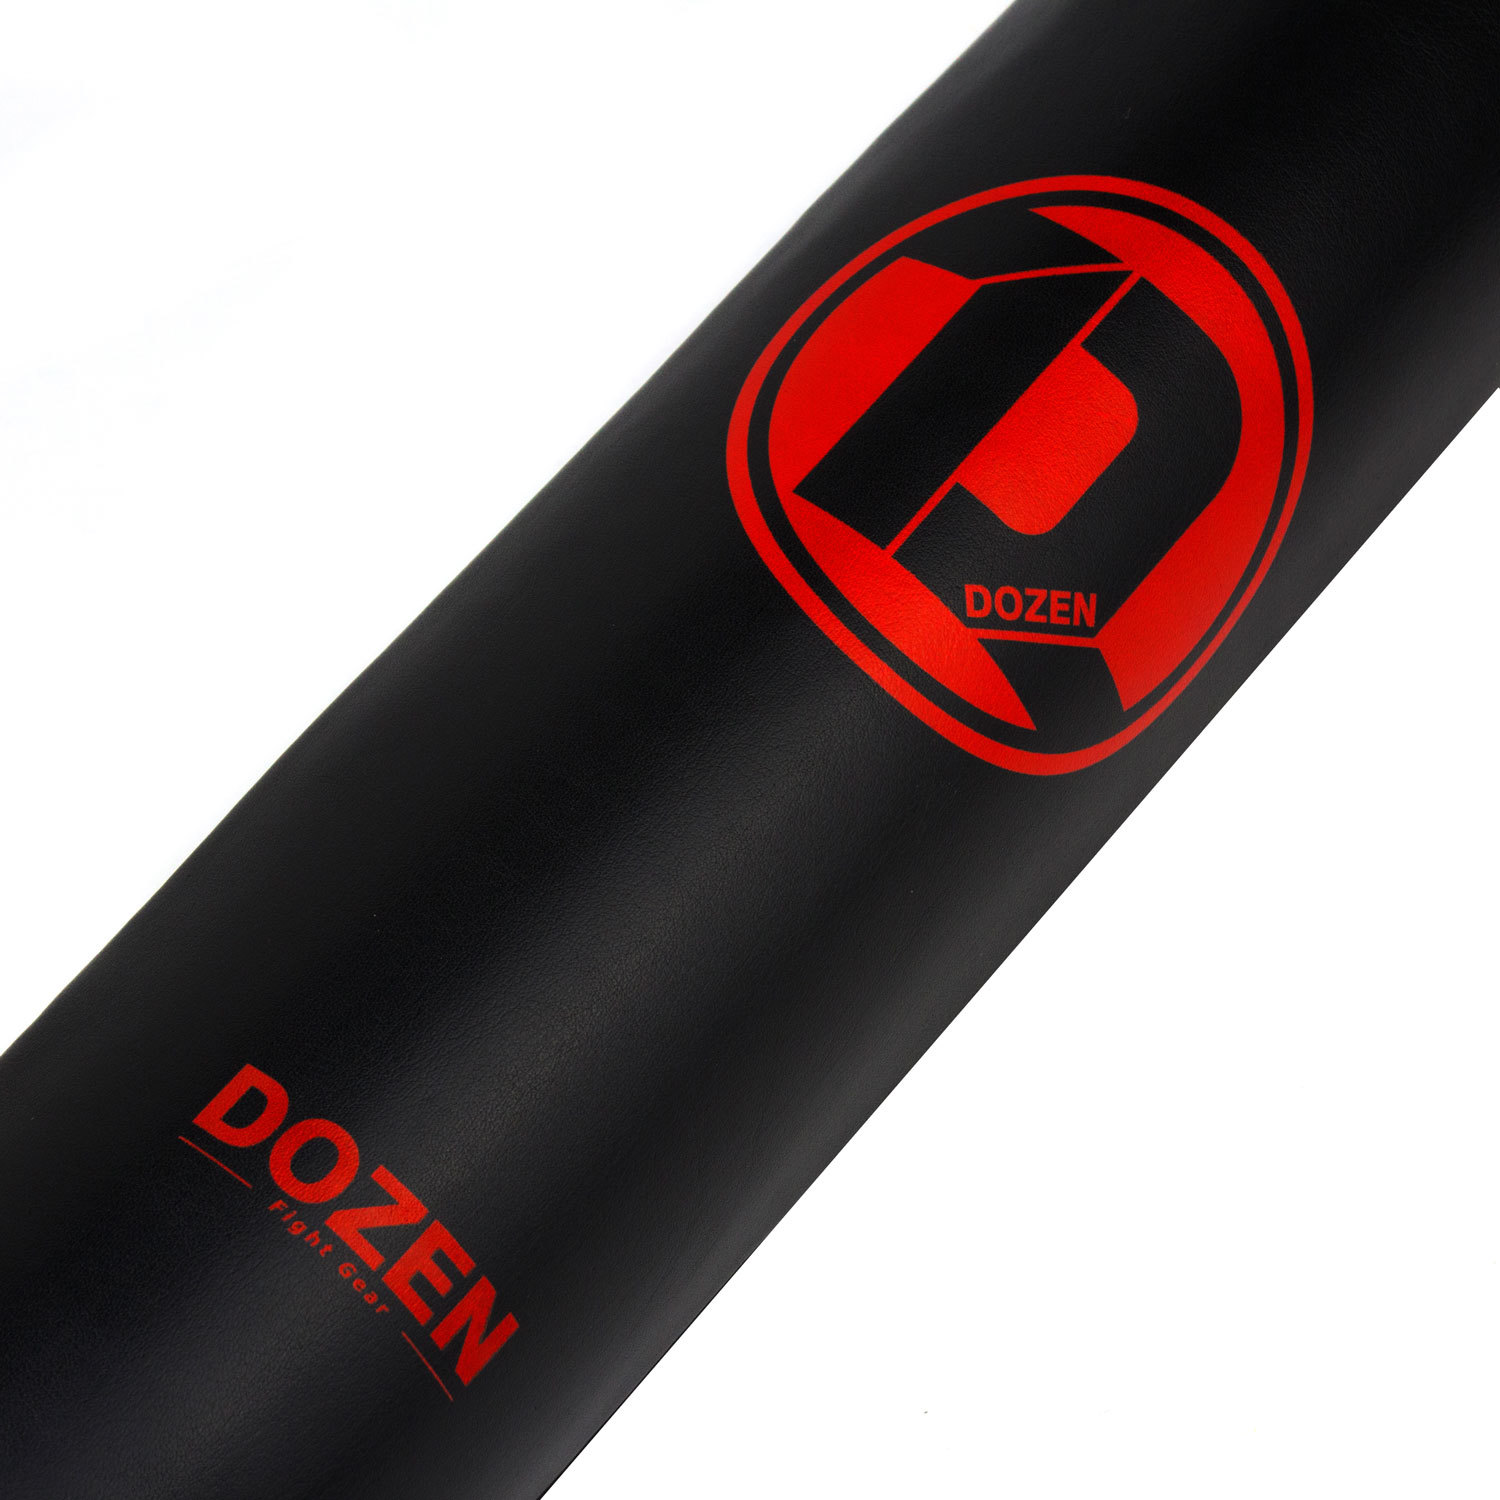 Лападаны Dozen Soft Hitting Sticks Black/Red лого на бьющей части